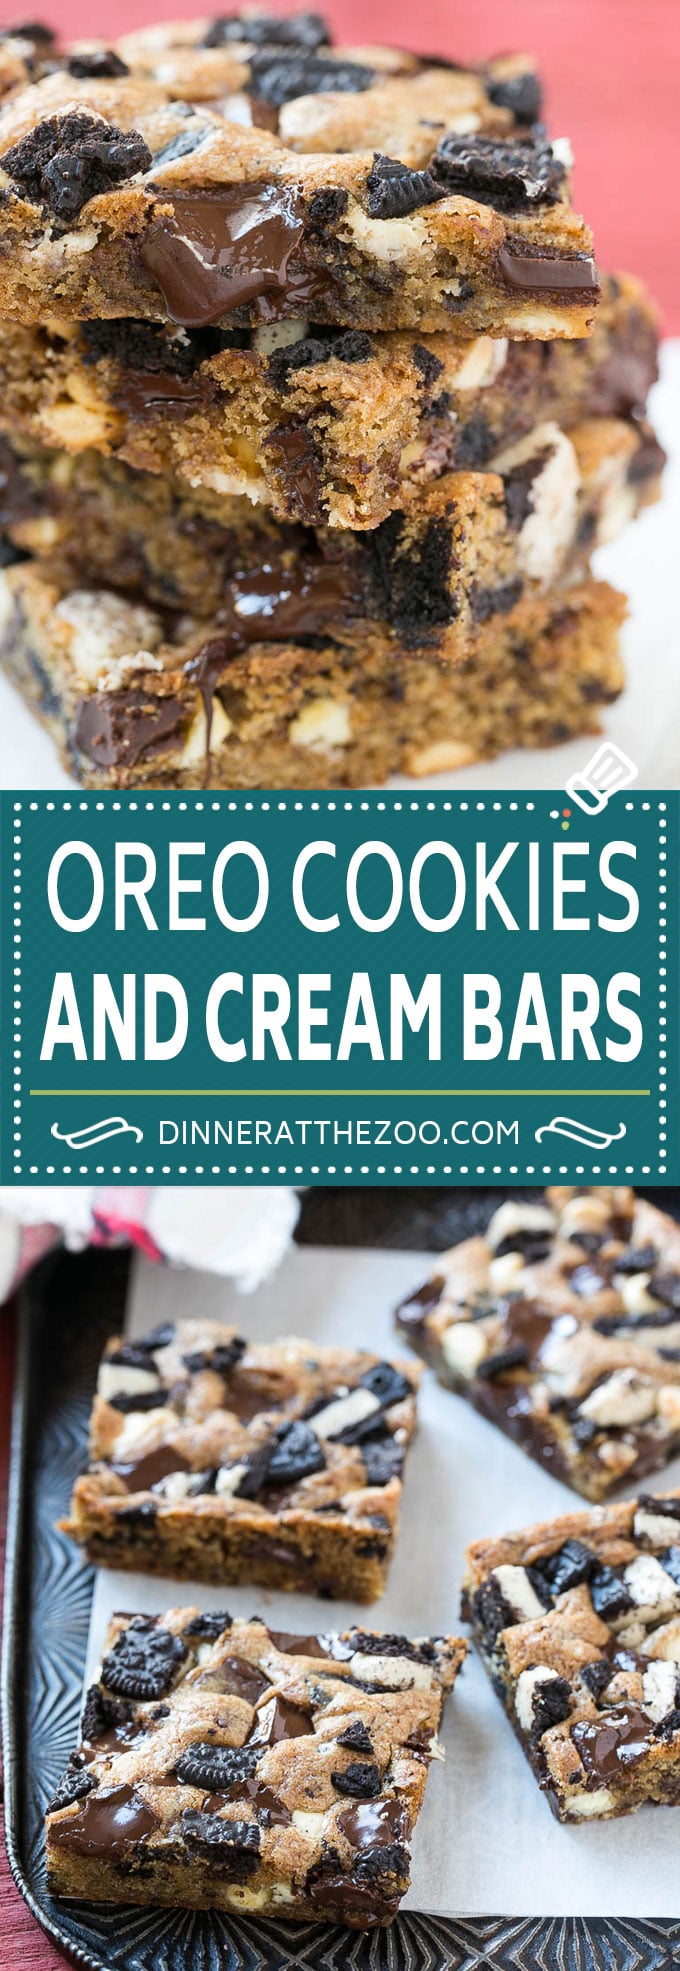 Oreo Cookies and Cream Bars Recipe | Bar Cookies #cookies #oreo #chocolate #dessert #dinneratthezoo